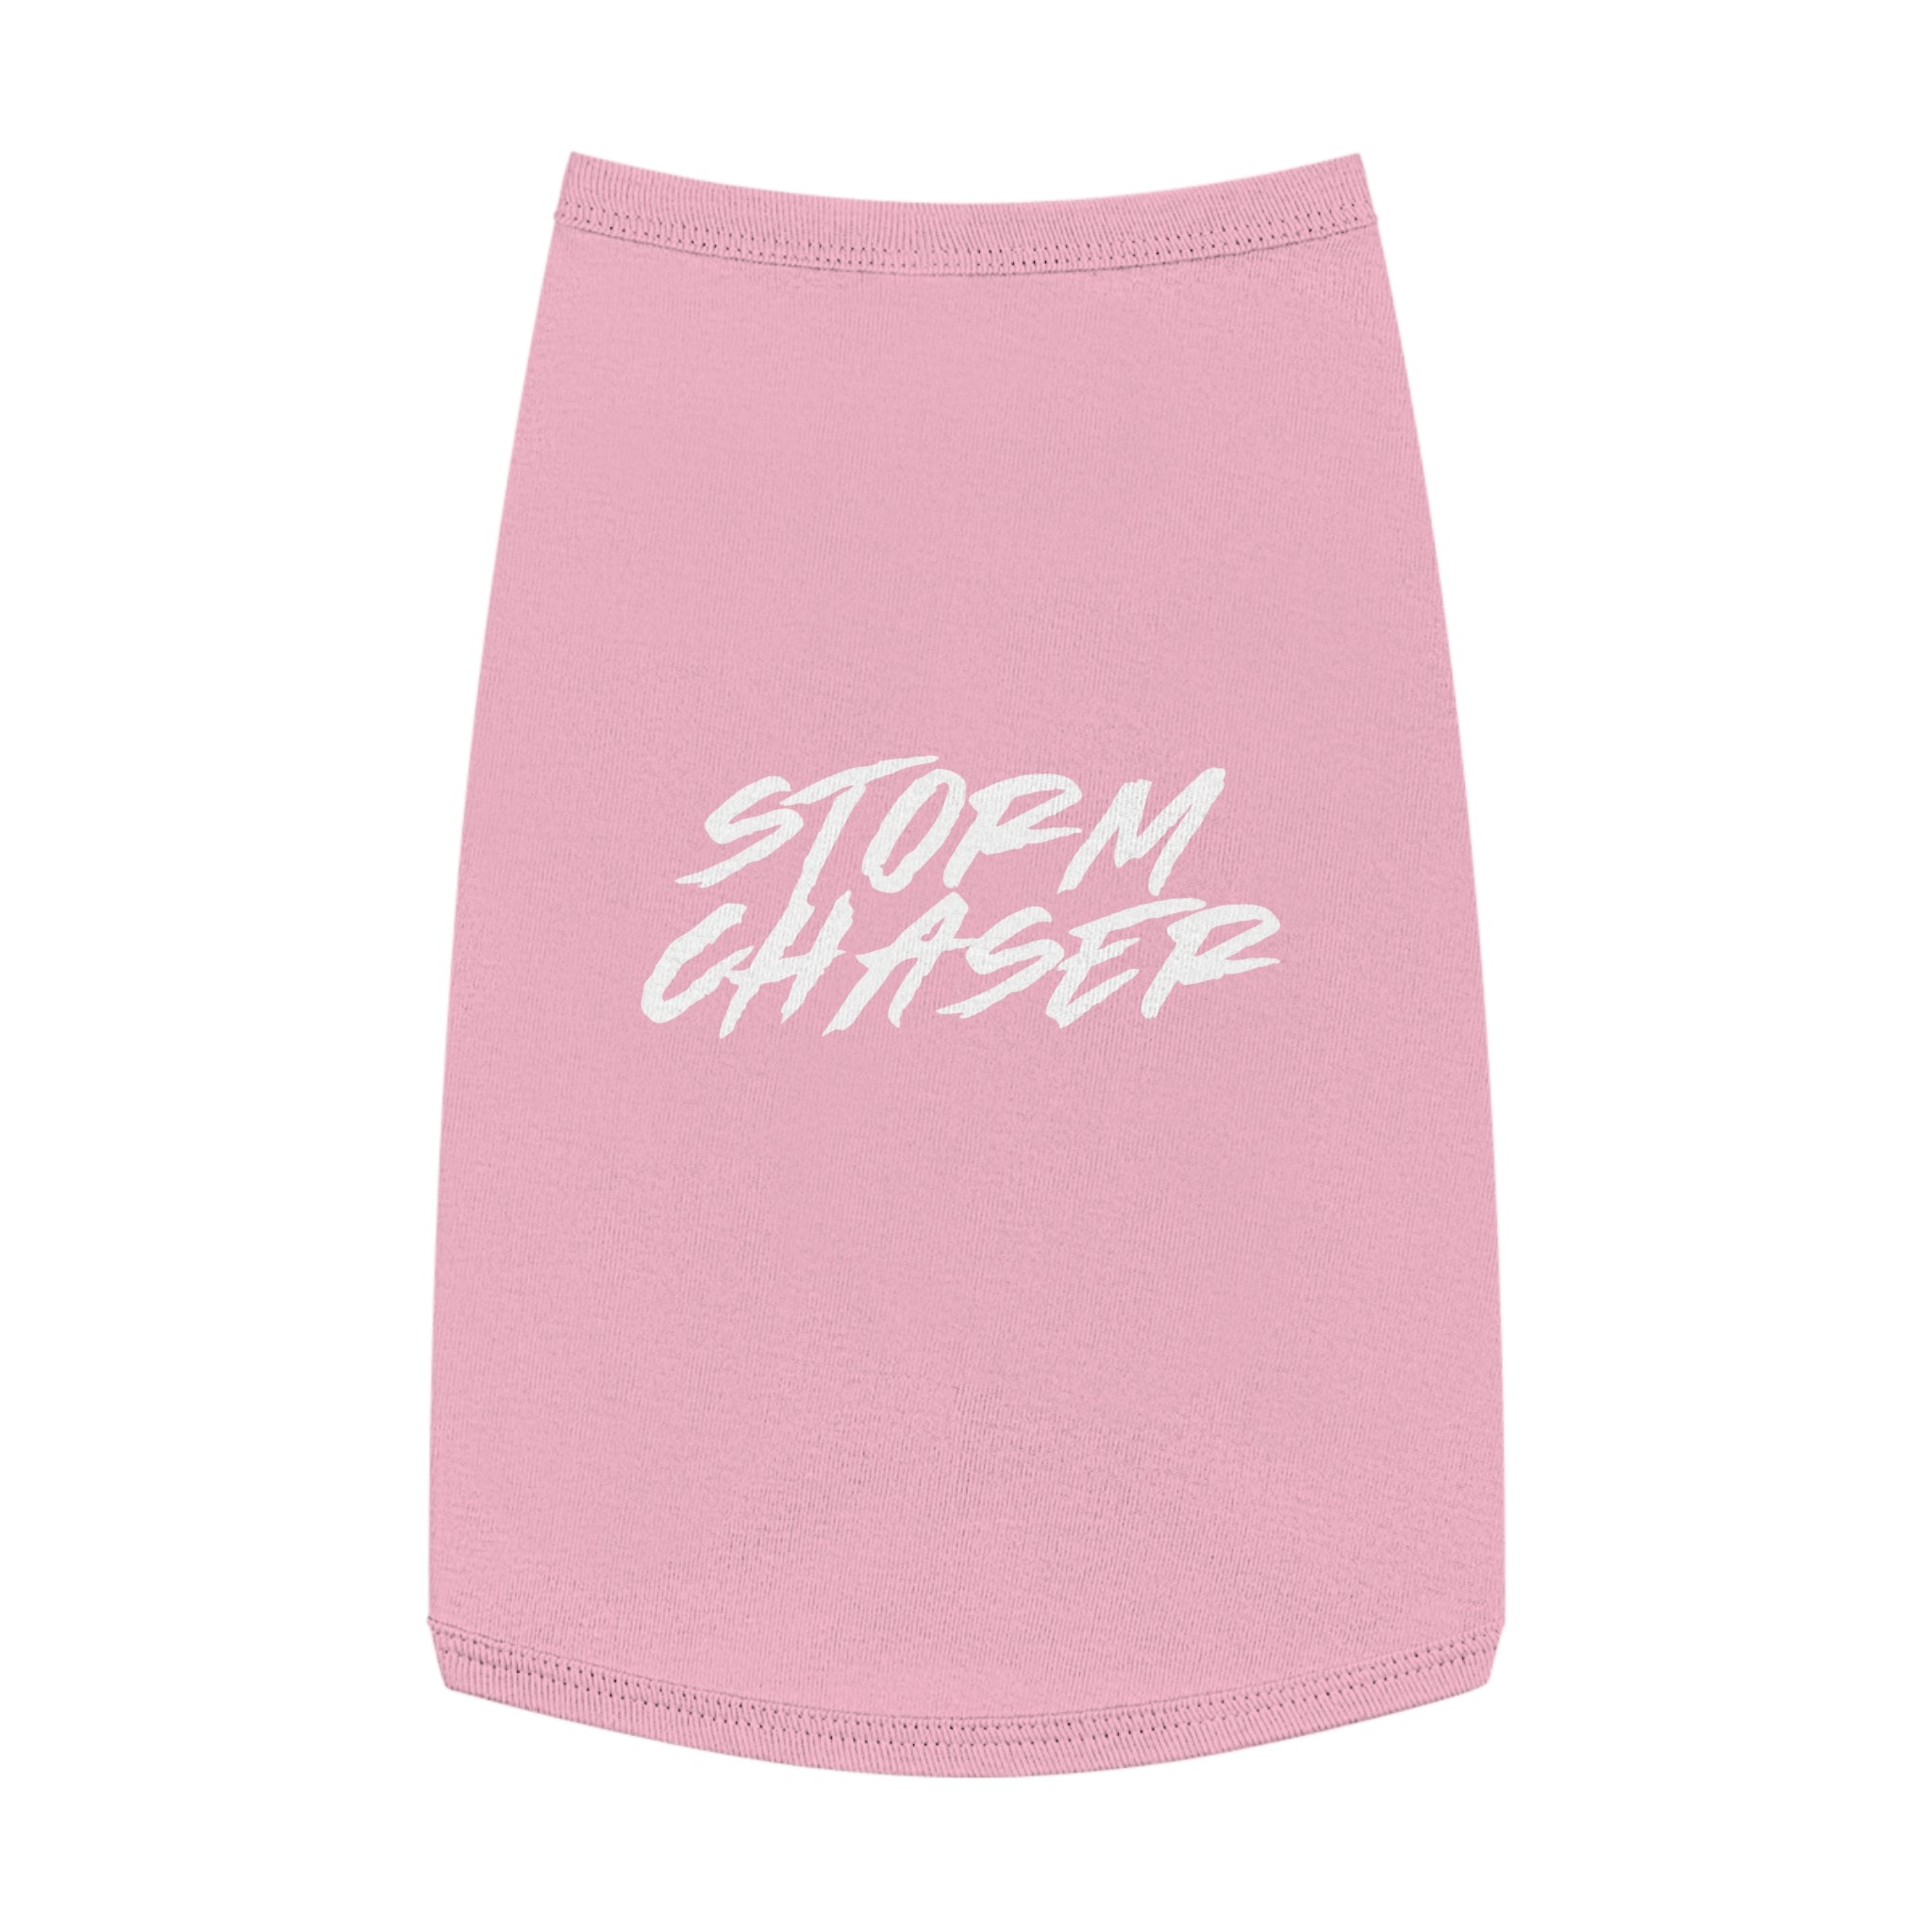 Storm Chaser Pet Shirt 